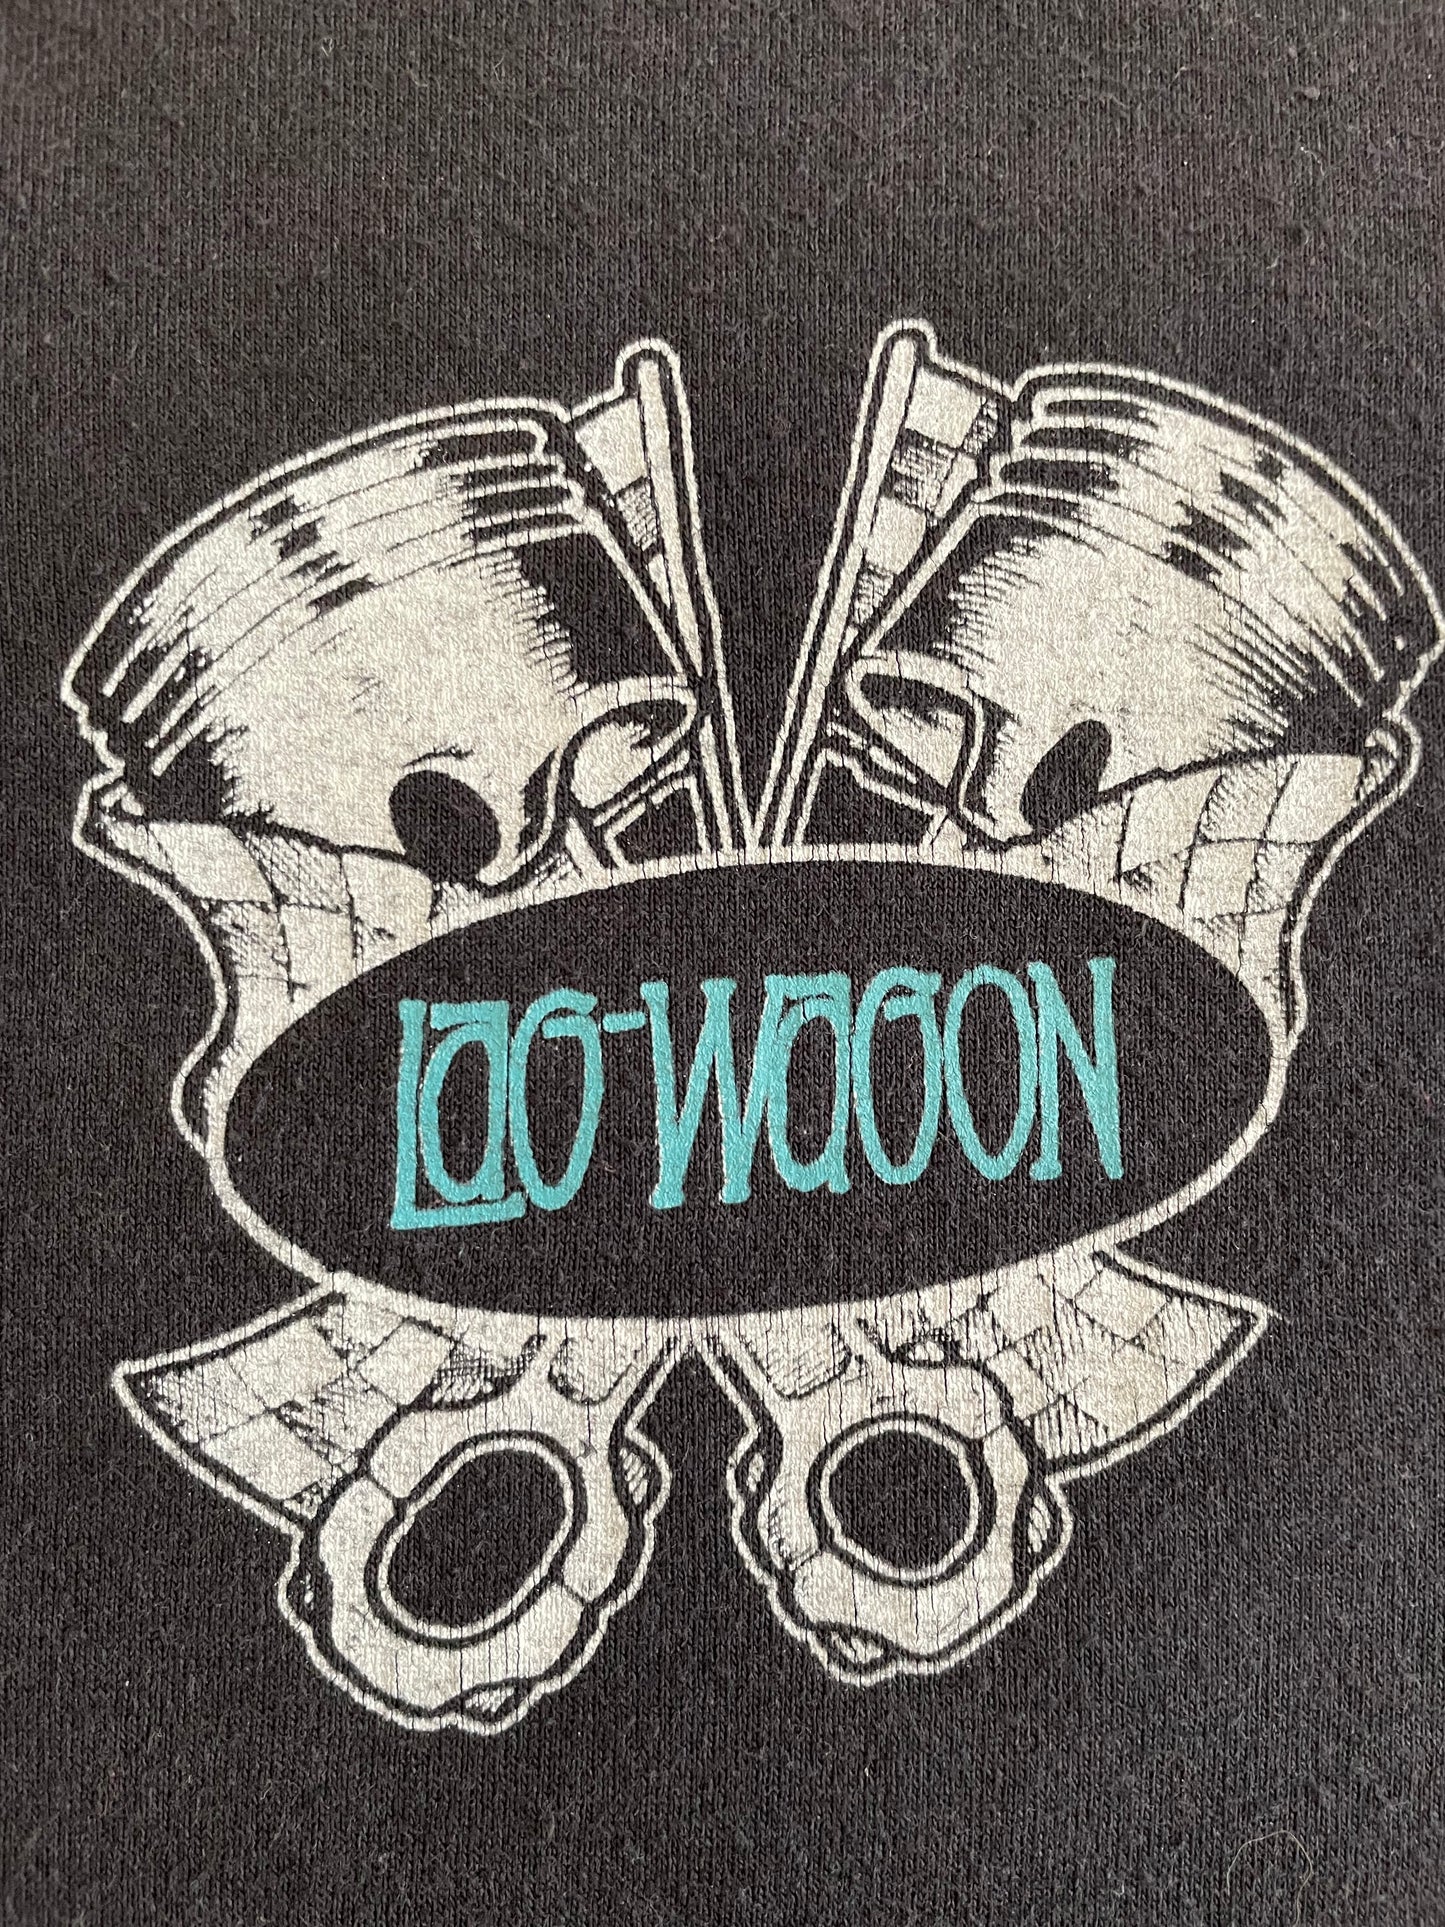 Lagwagon - Trashed Tour - Original Vintage 1994 t-shirt